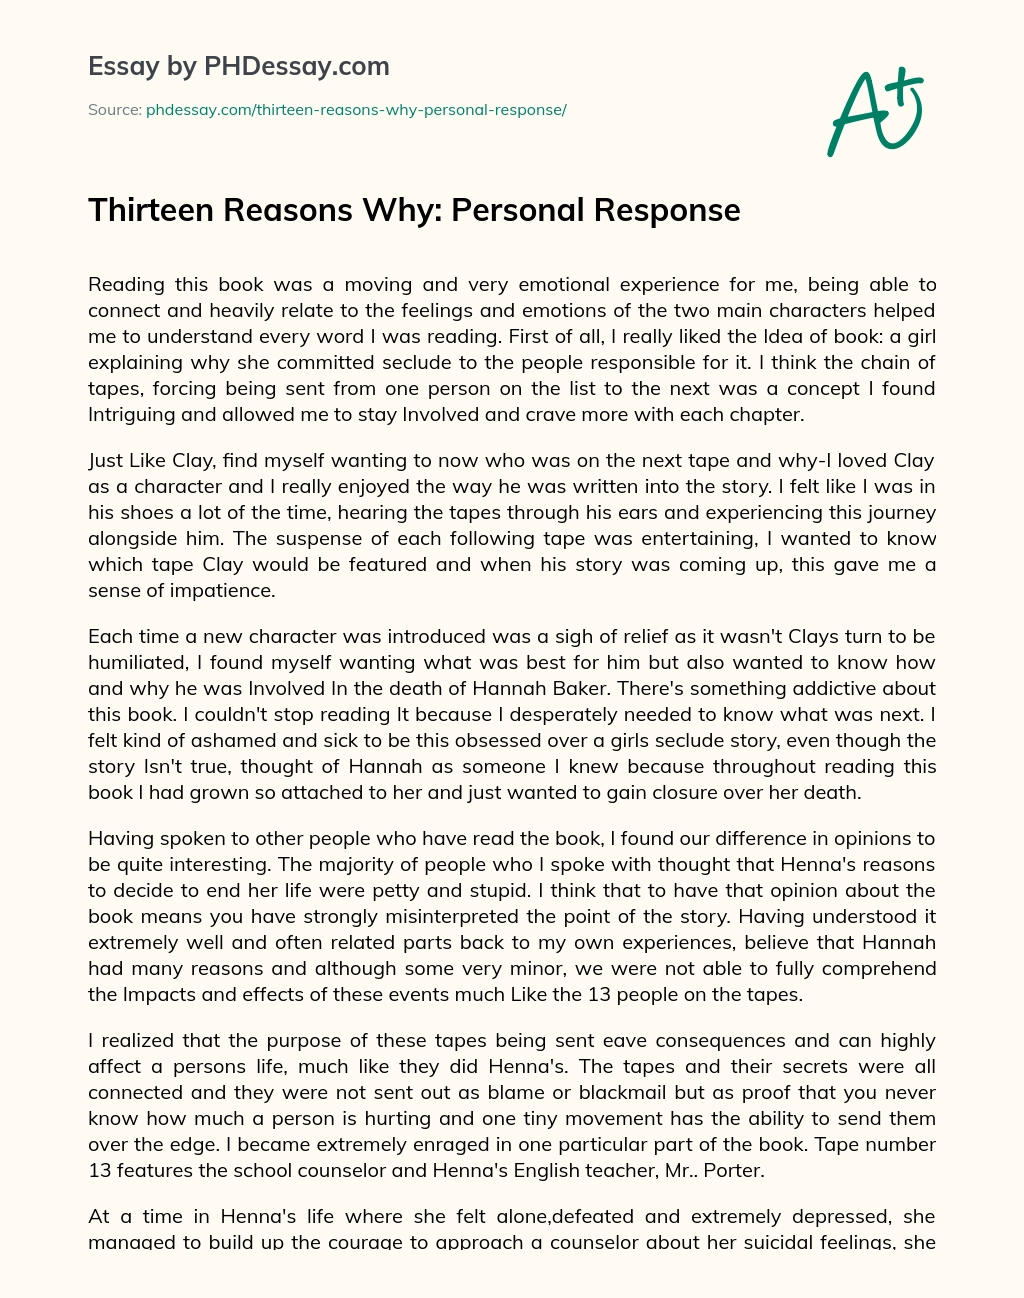 Thirteen Reasons Why: Personal Response essay